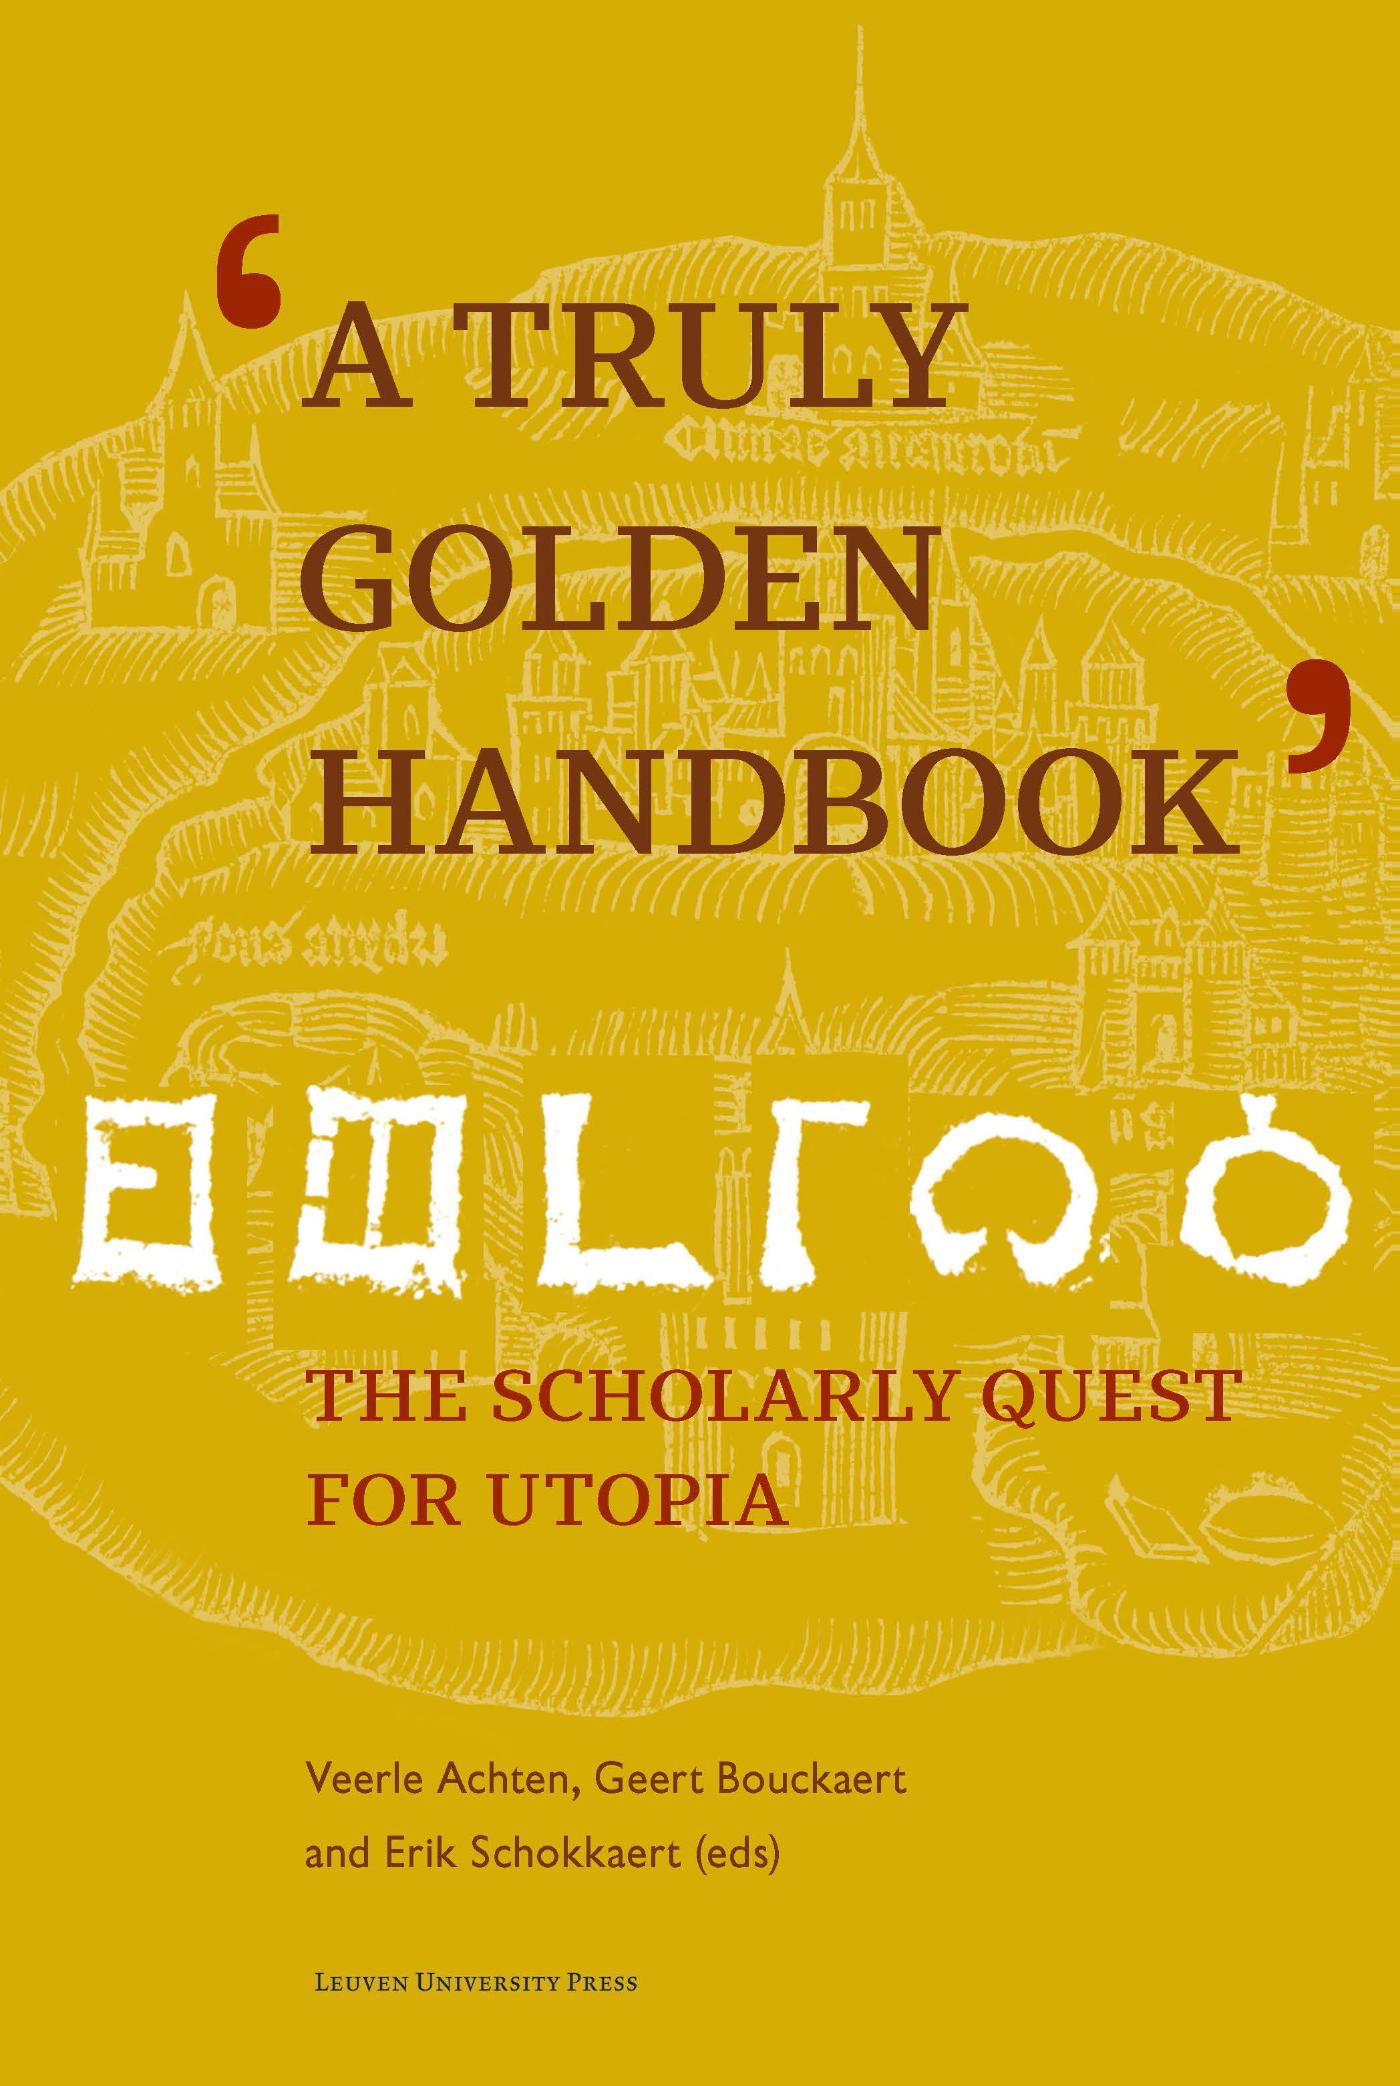 A truly golden handbook (Ebook)